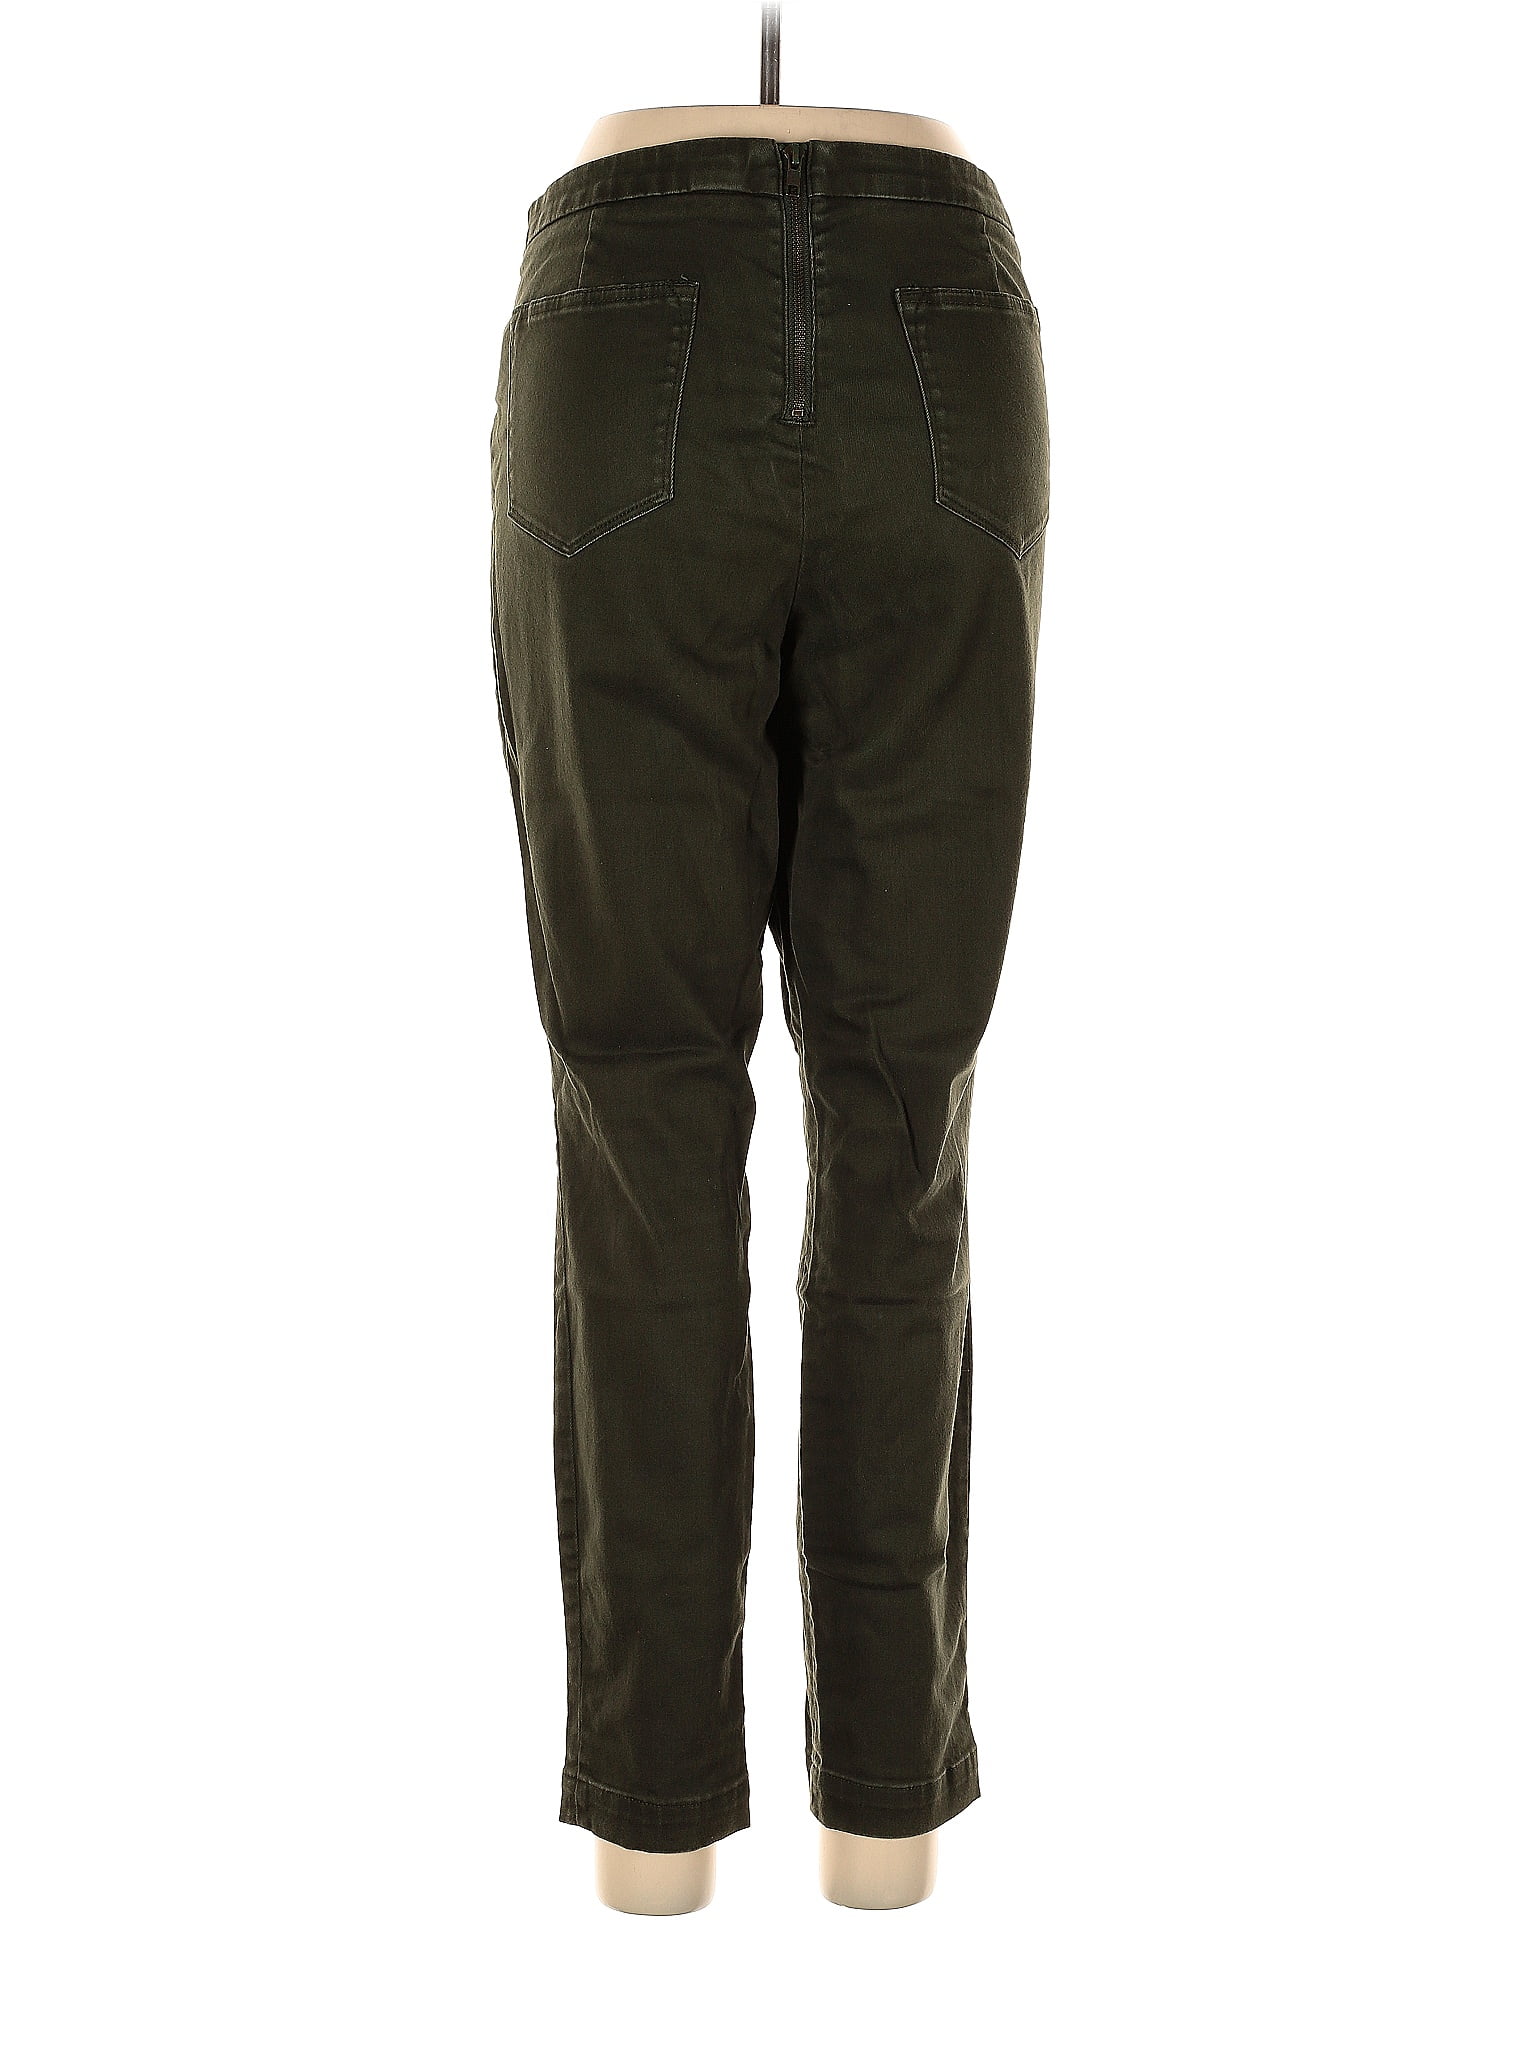 J.Jill Solid Green Casual Pants Size 2X (Plus) - 70% off